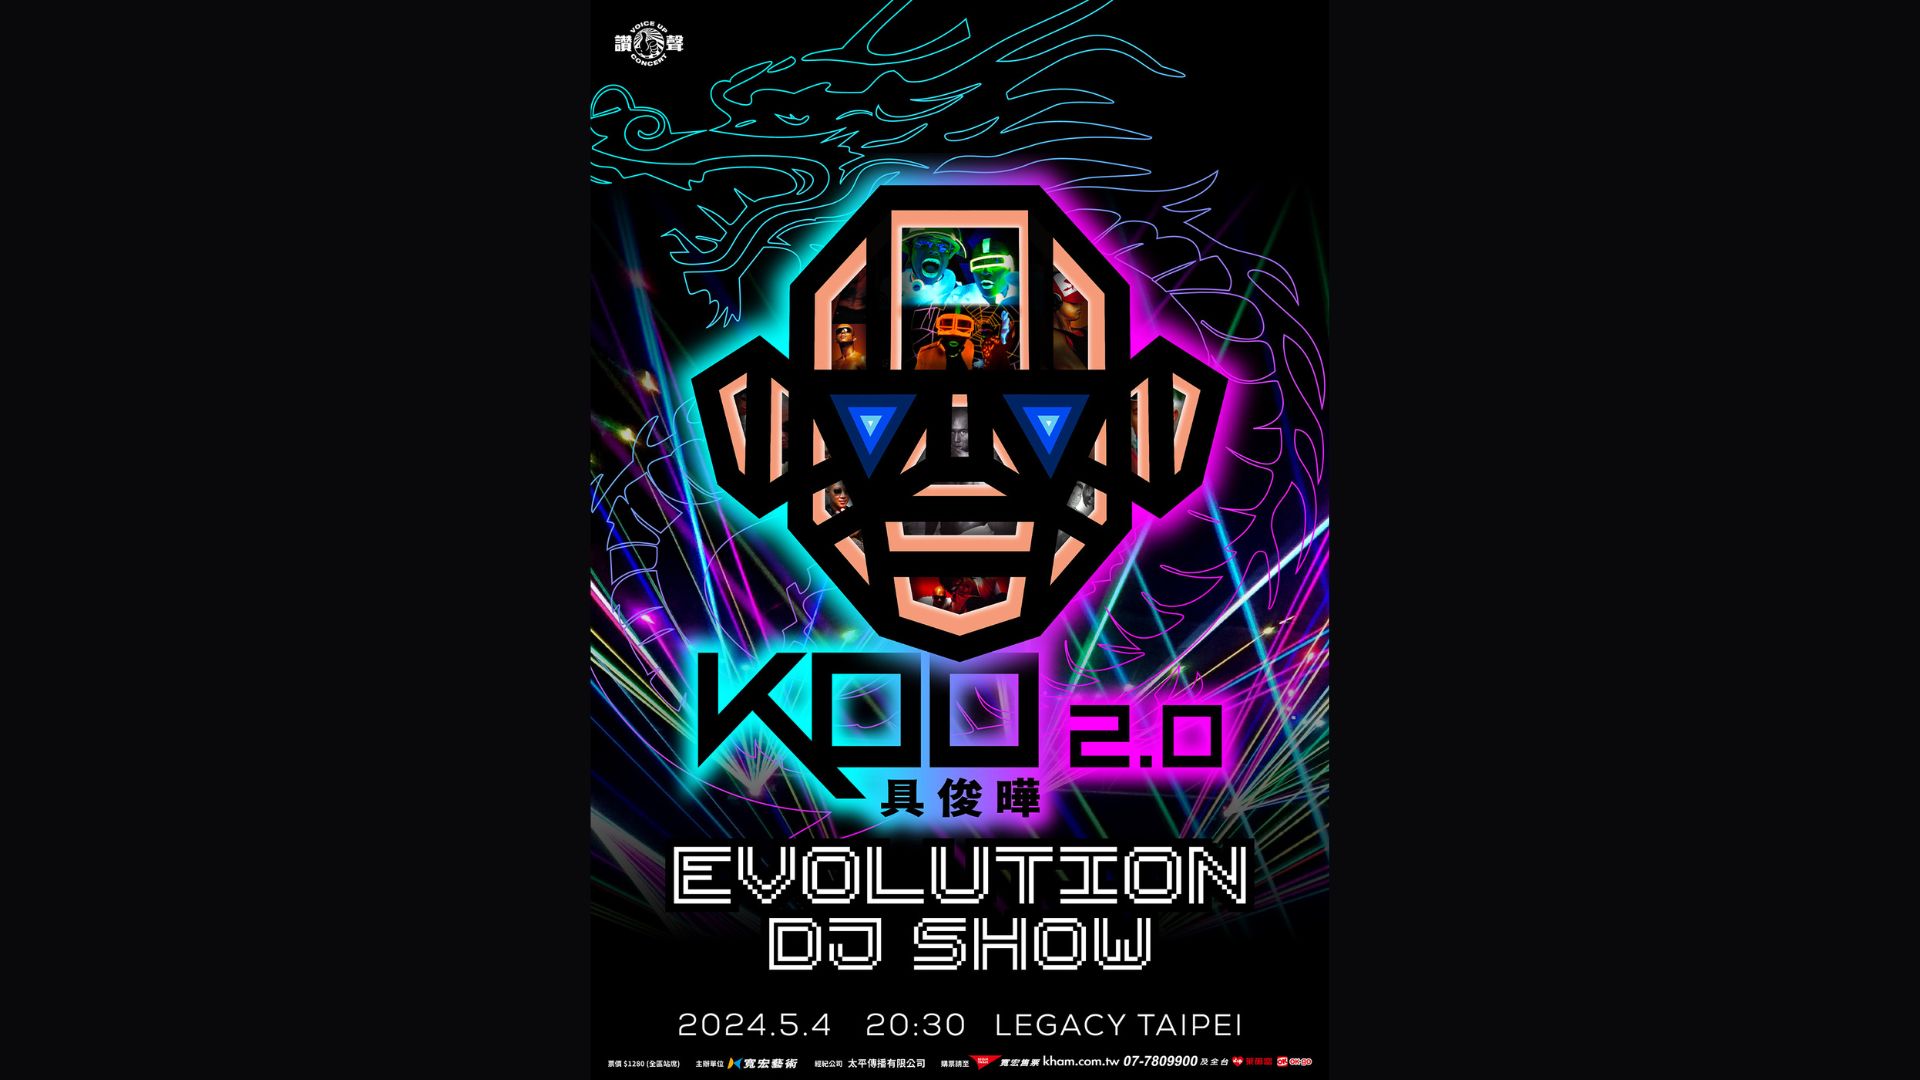 Koo 2.0 具俊曄 Evolution DJ SHOW 酷的進化論｜Legacy Taipei